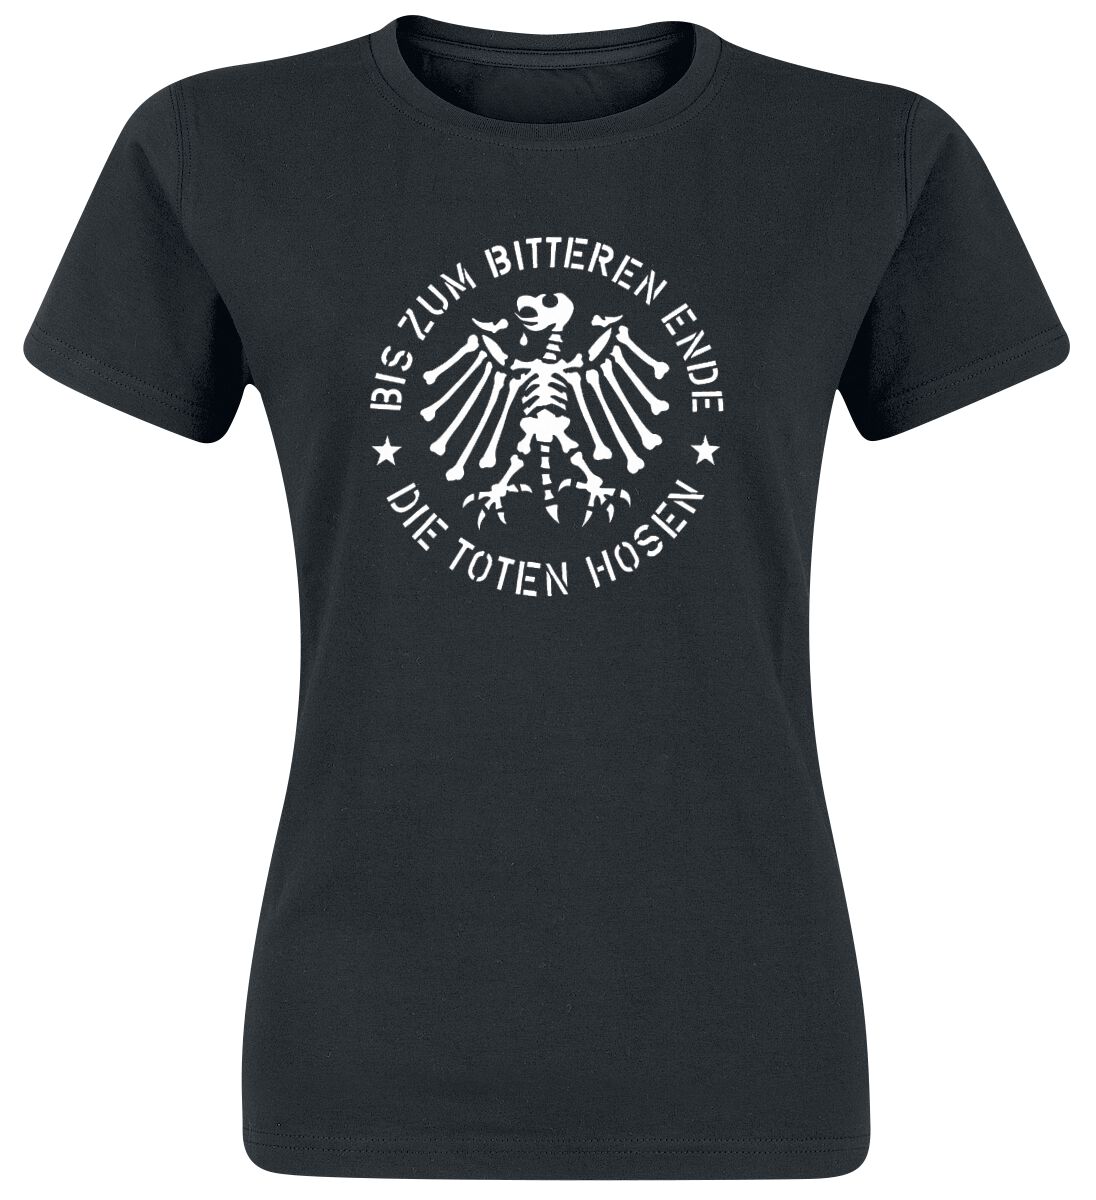 T-Shirt Manches courtes de Die Toten Hosen - Bis zum bitteren Ende - S à XL - pour Femme - noir